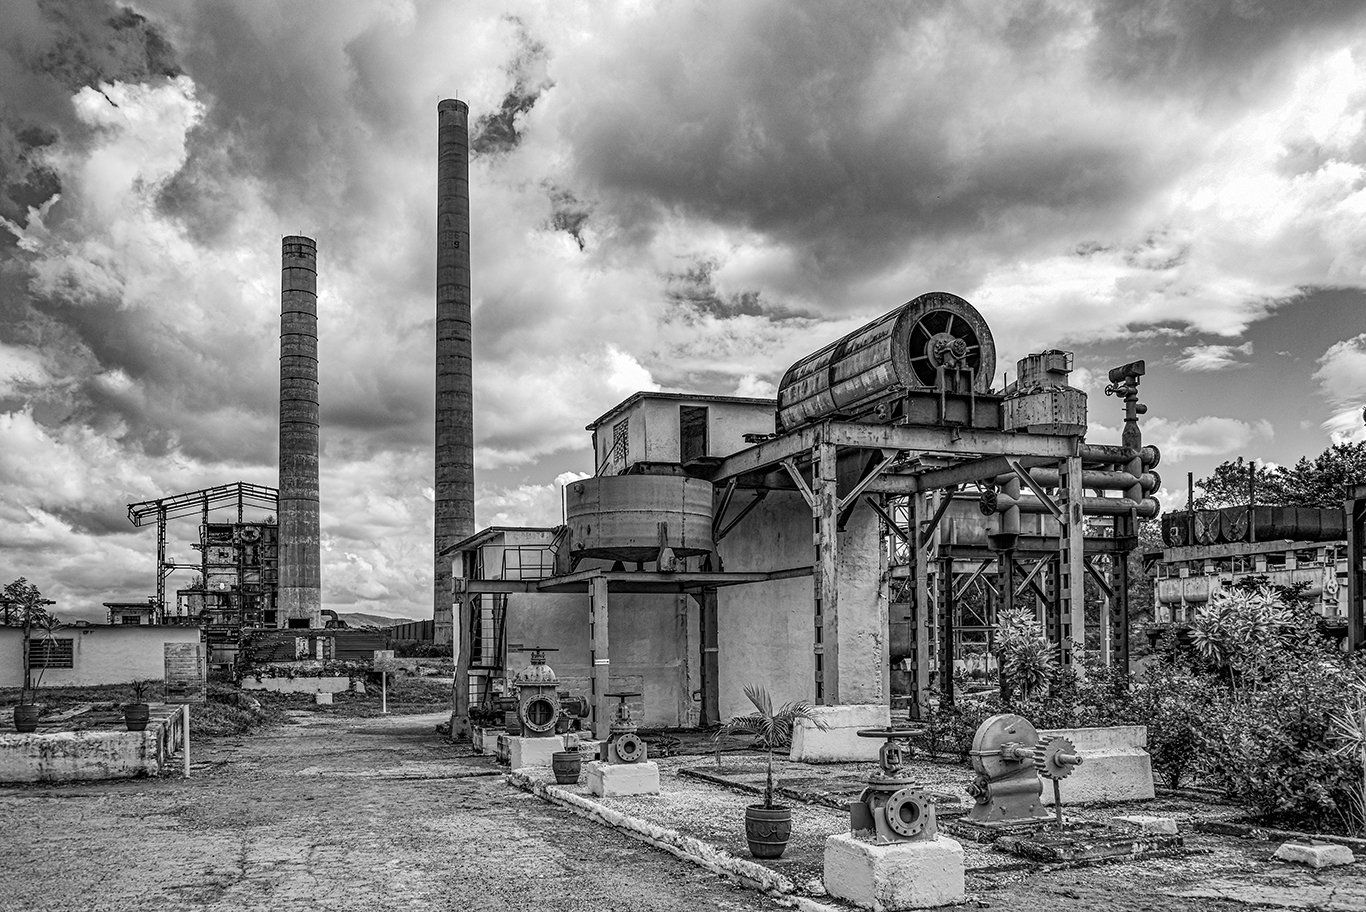 An Abandoned Sugar Mill in Cuba Photo Gallery by David Ferguson